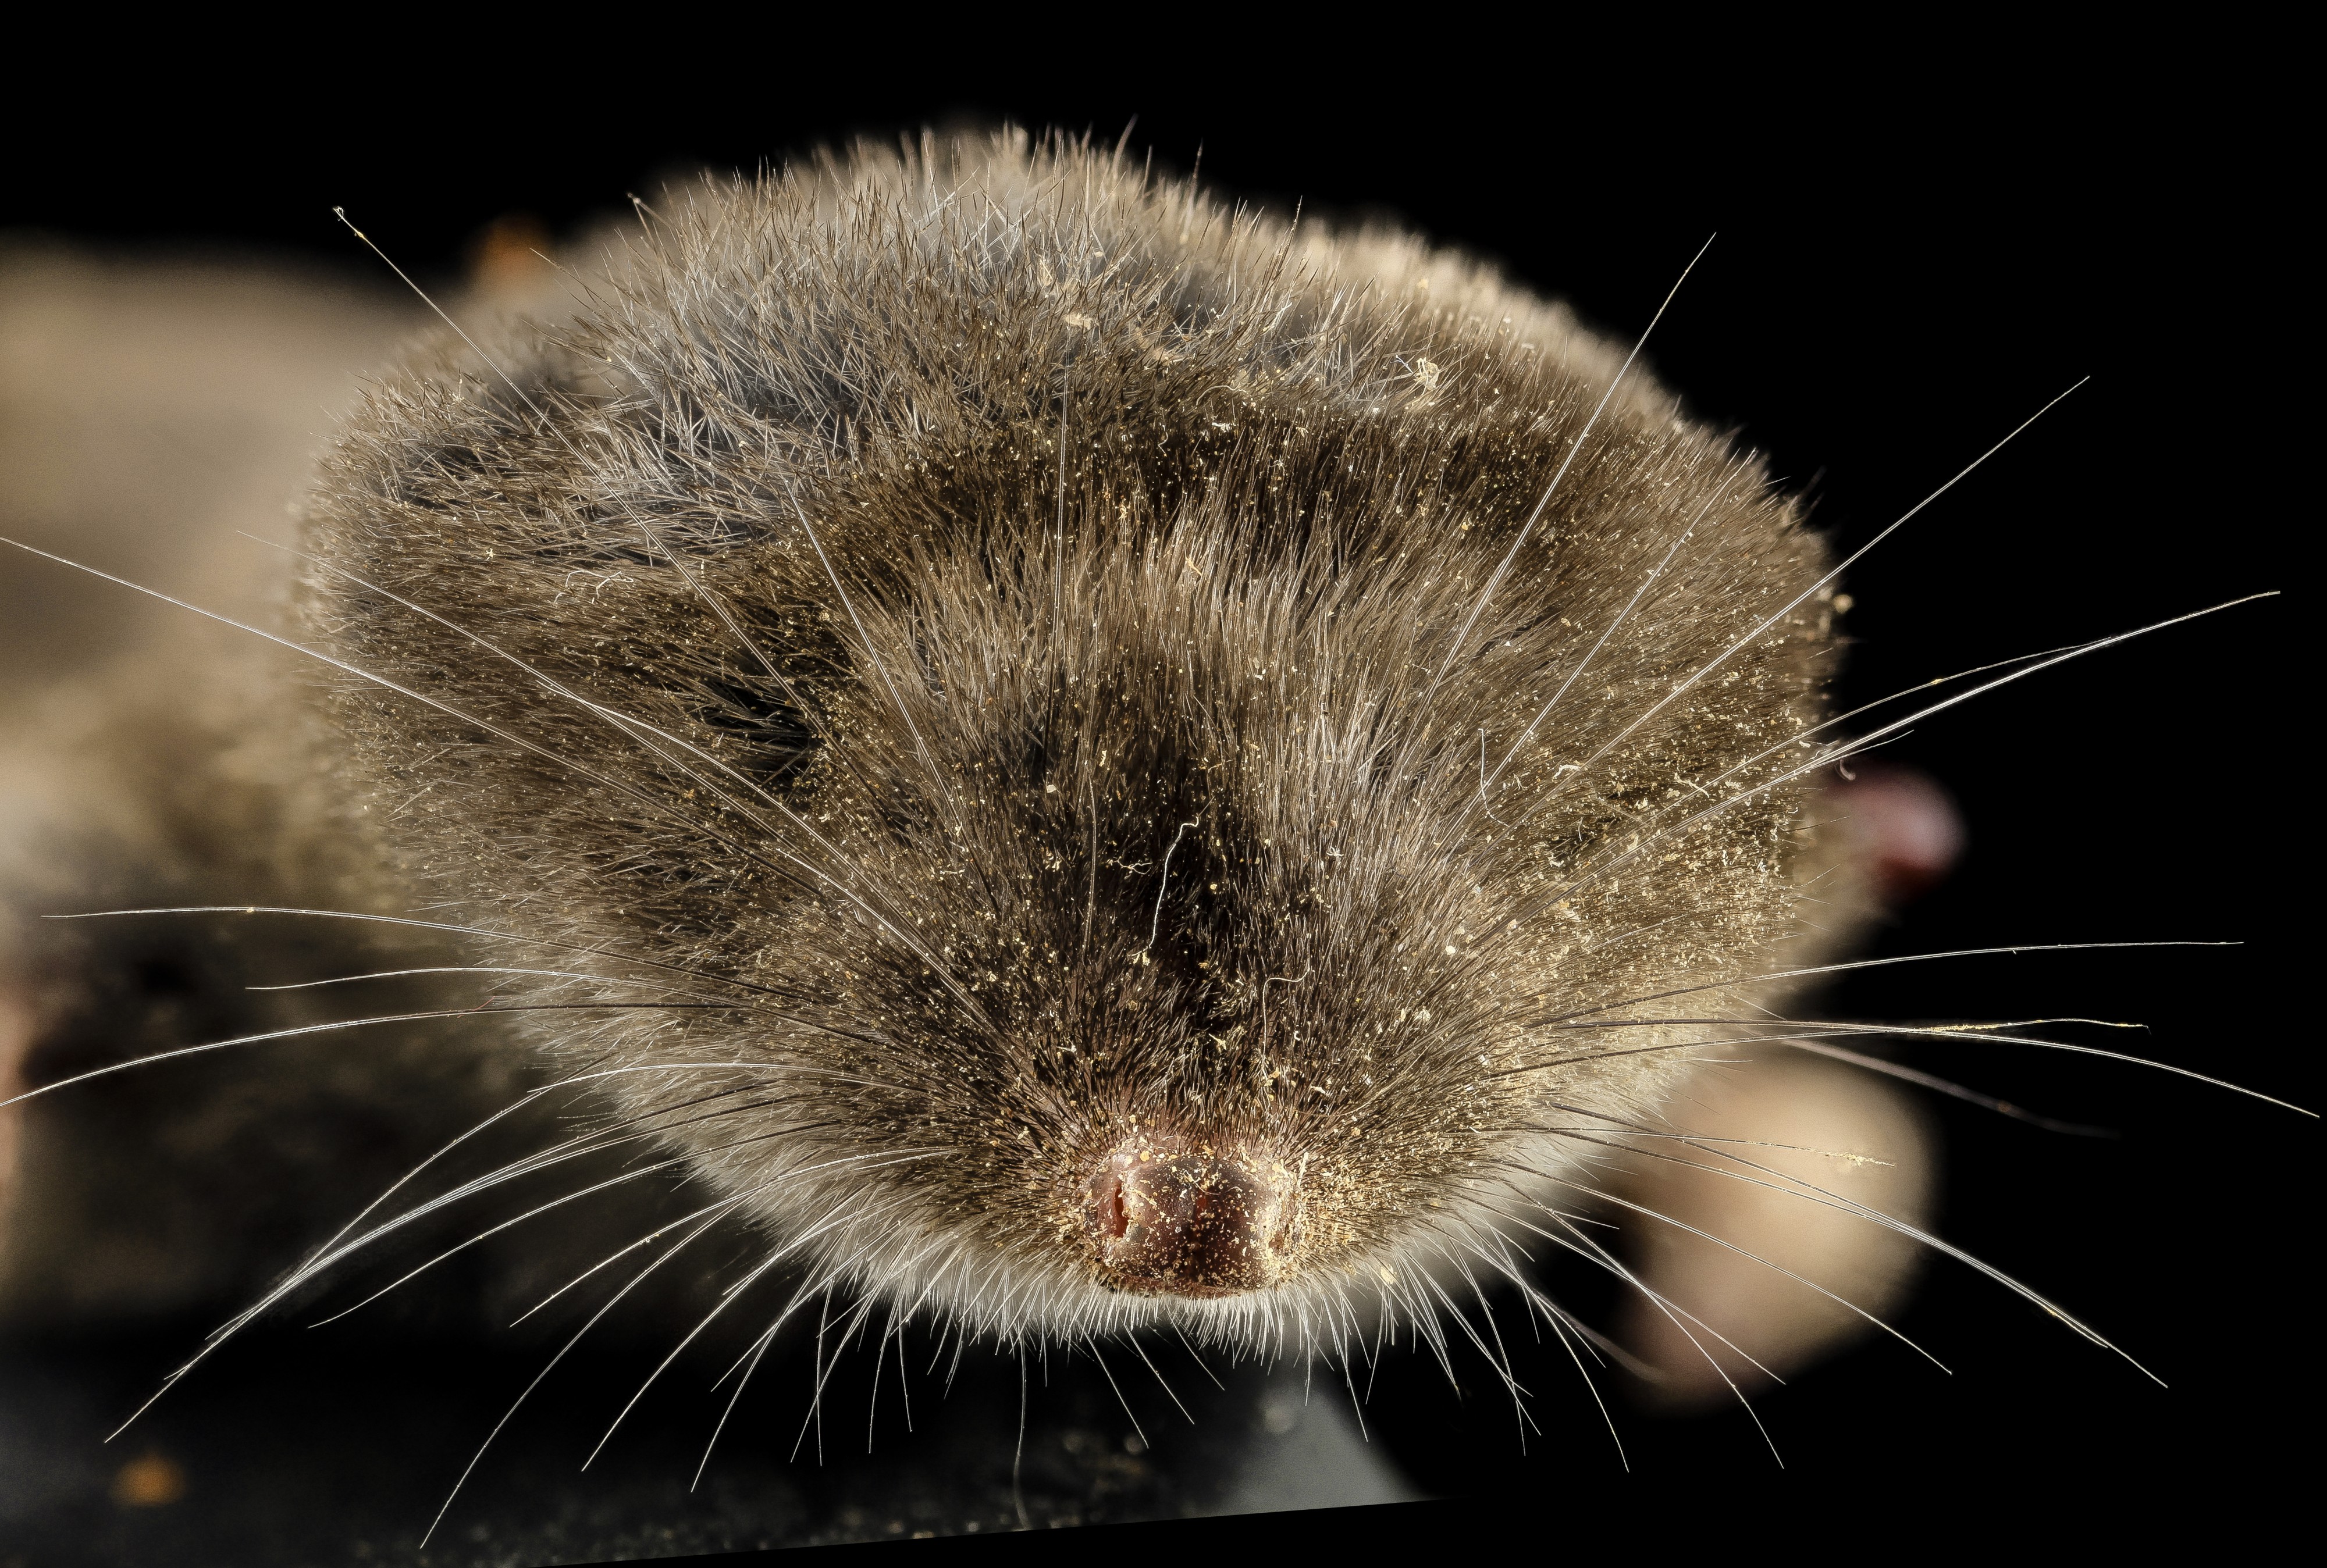 Short-tailed shrew, face, front, md, upper marlboro 2014-06-04-13.15.37 ZS PMax (14362614495)